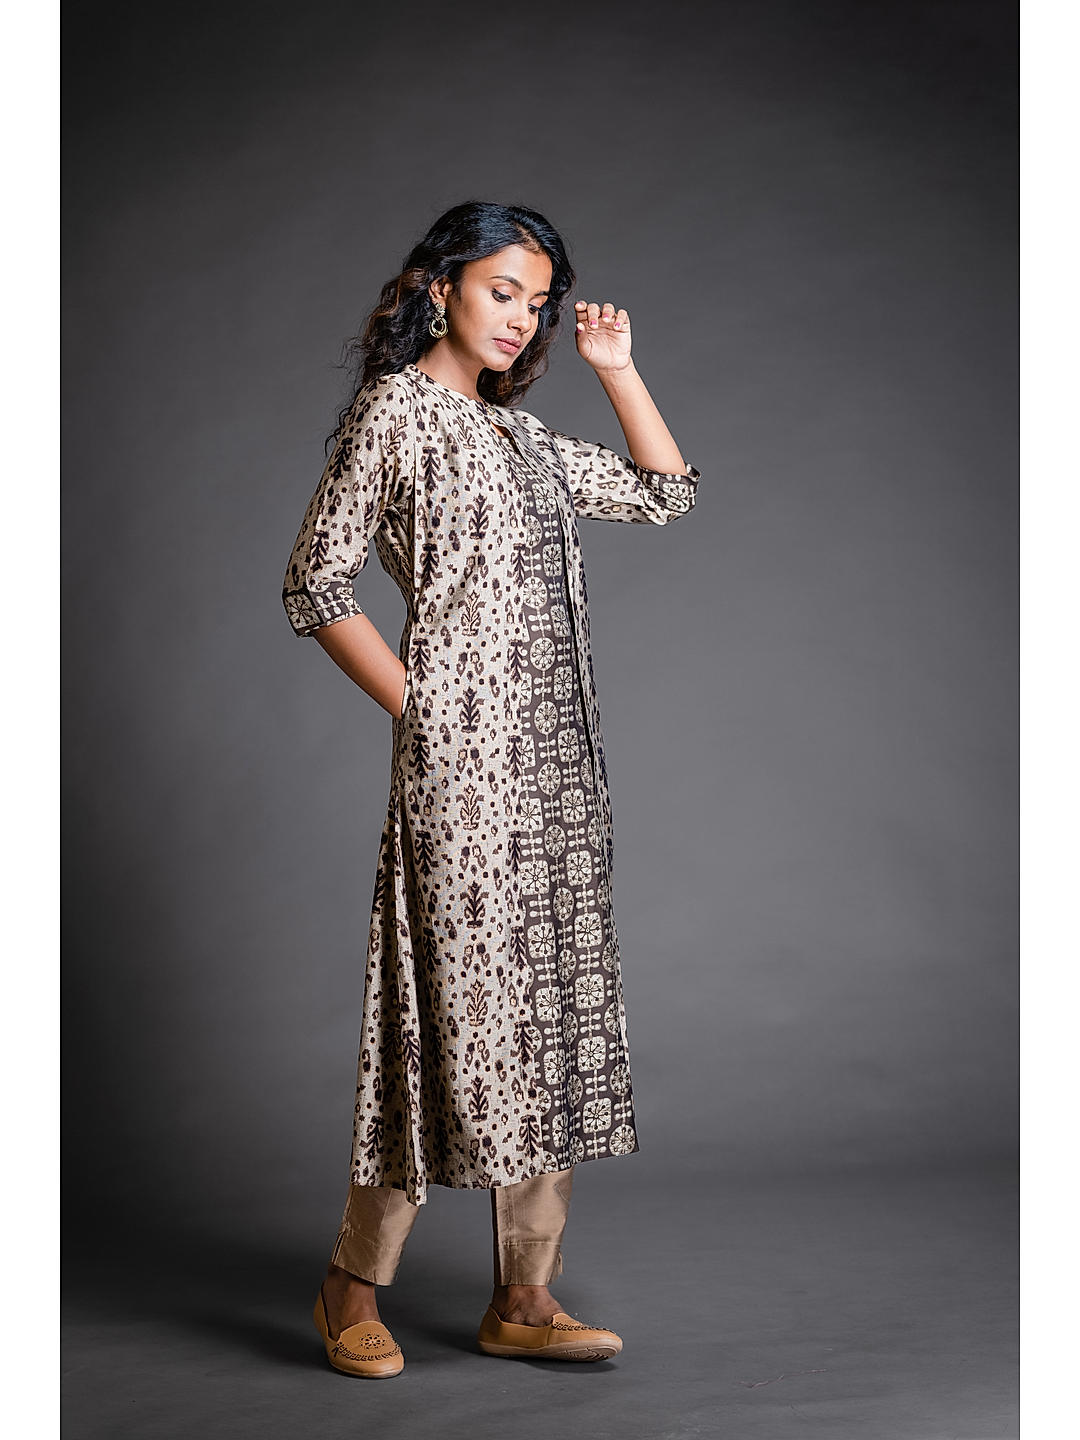 Style Me - Tiger print kurti 🐆 👉Choose your dress design... | Facebook